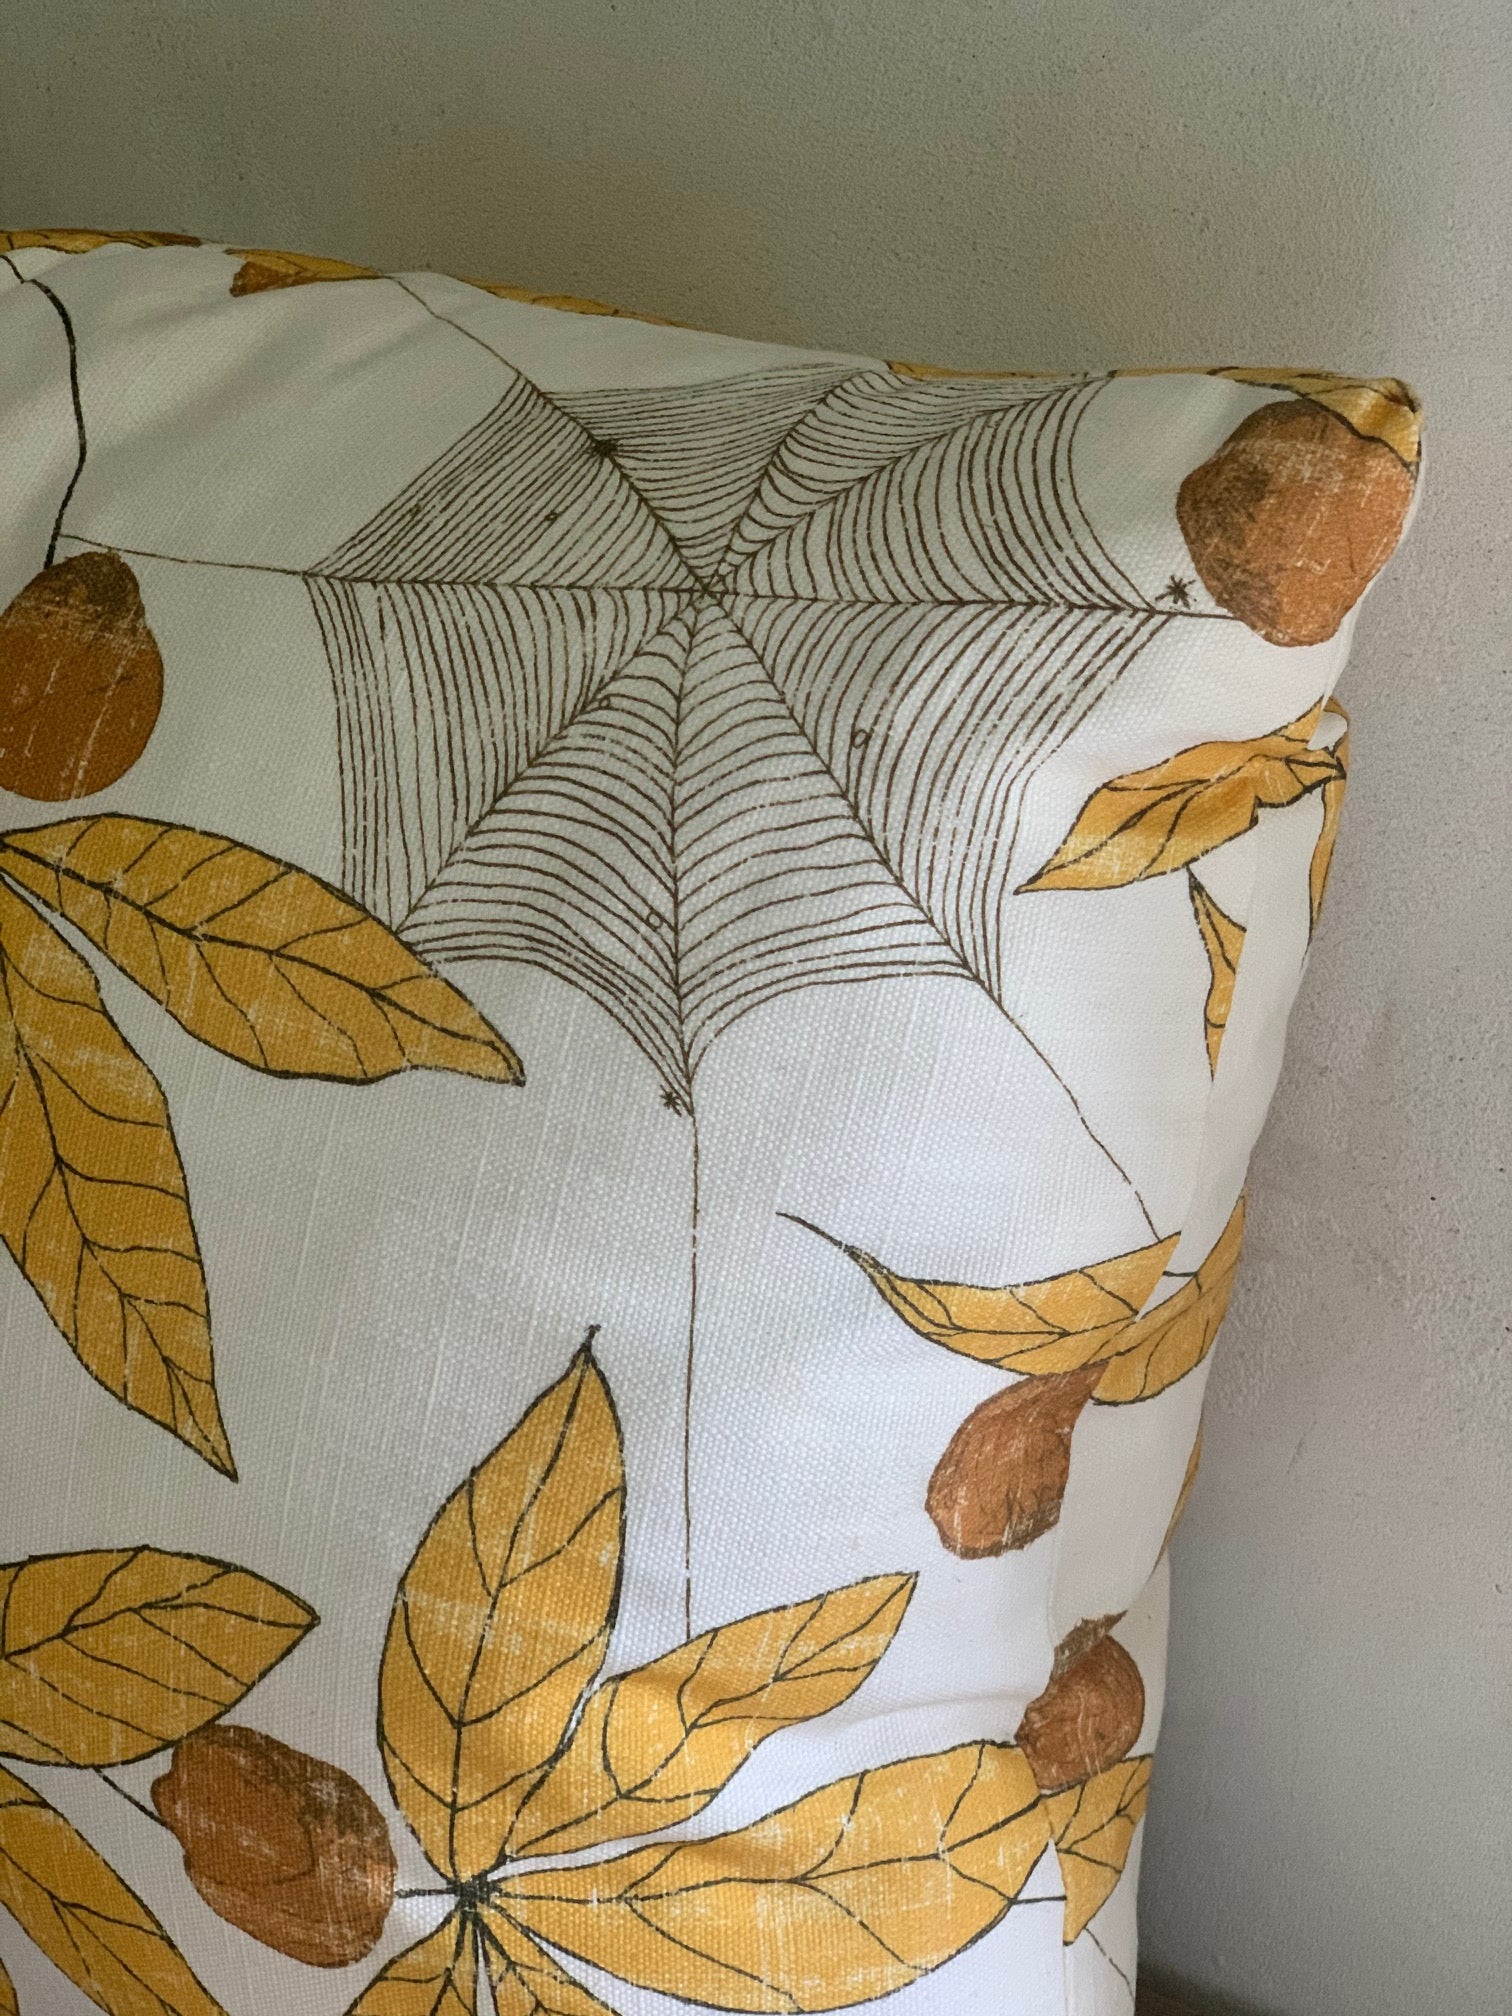 LL textiles  "gisele's web" pillow